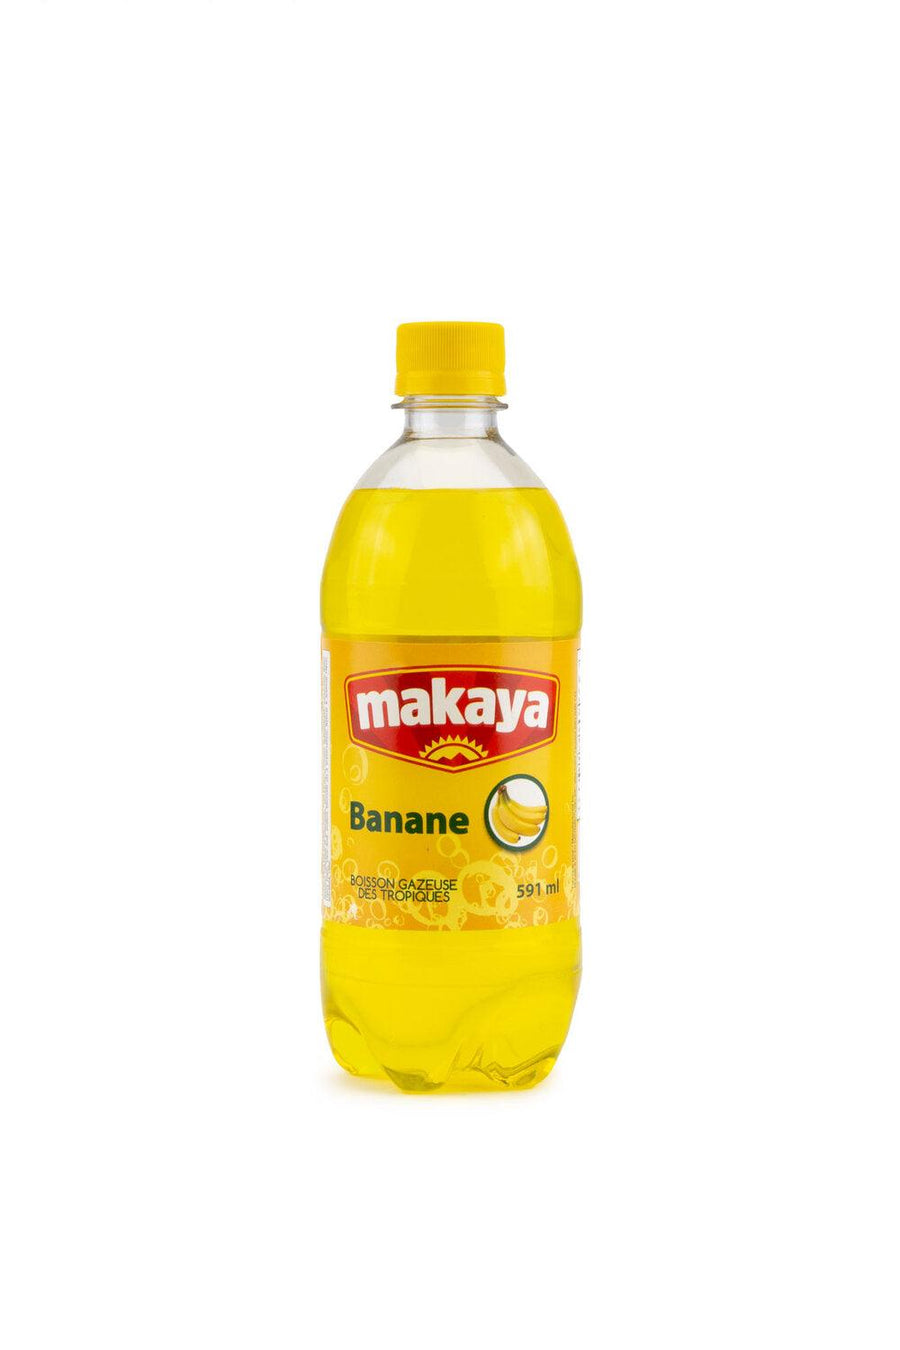 Makaya Banana Soda - Soft Drinks (12 x 591ml) (Can Dep) - Quecan